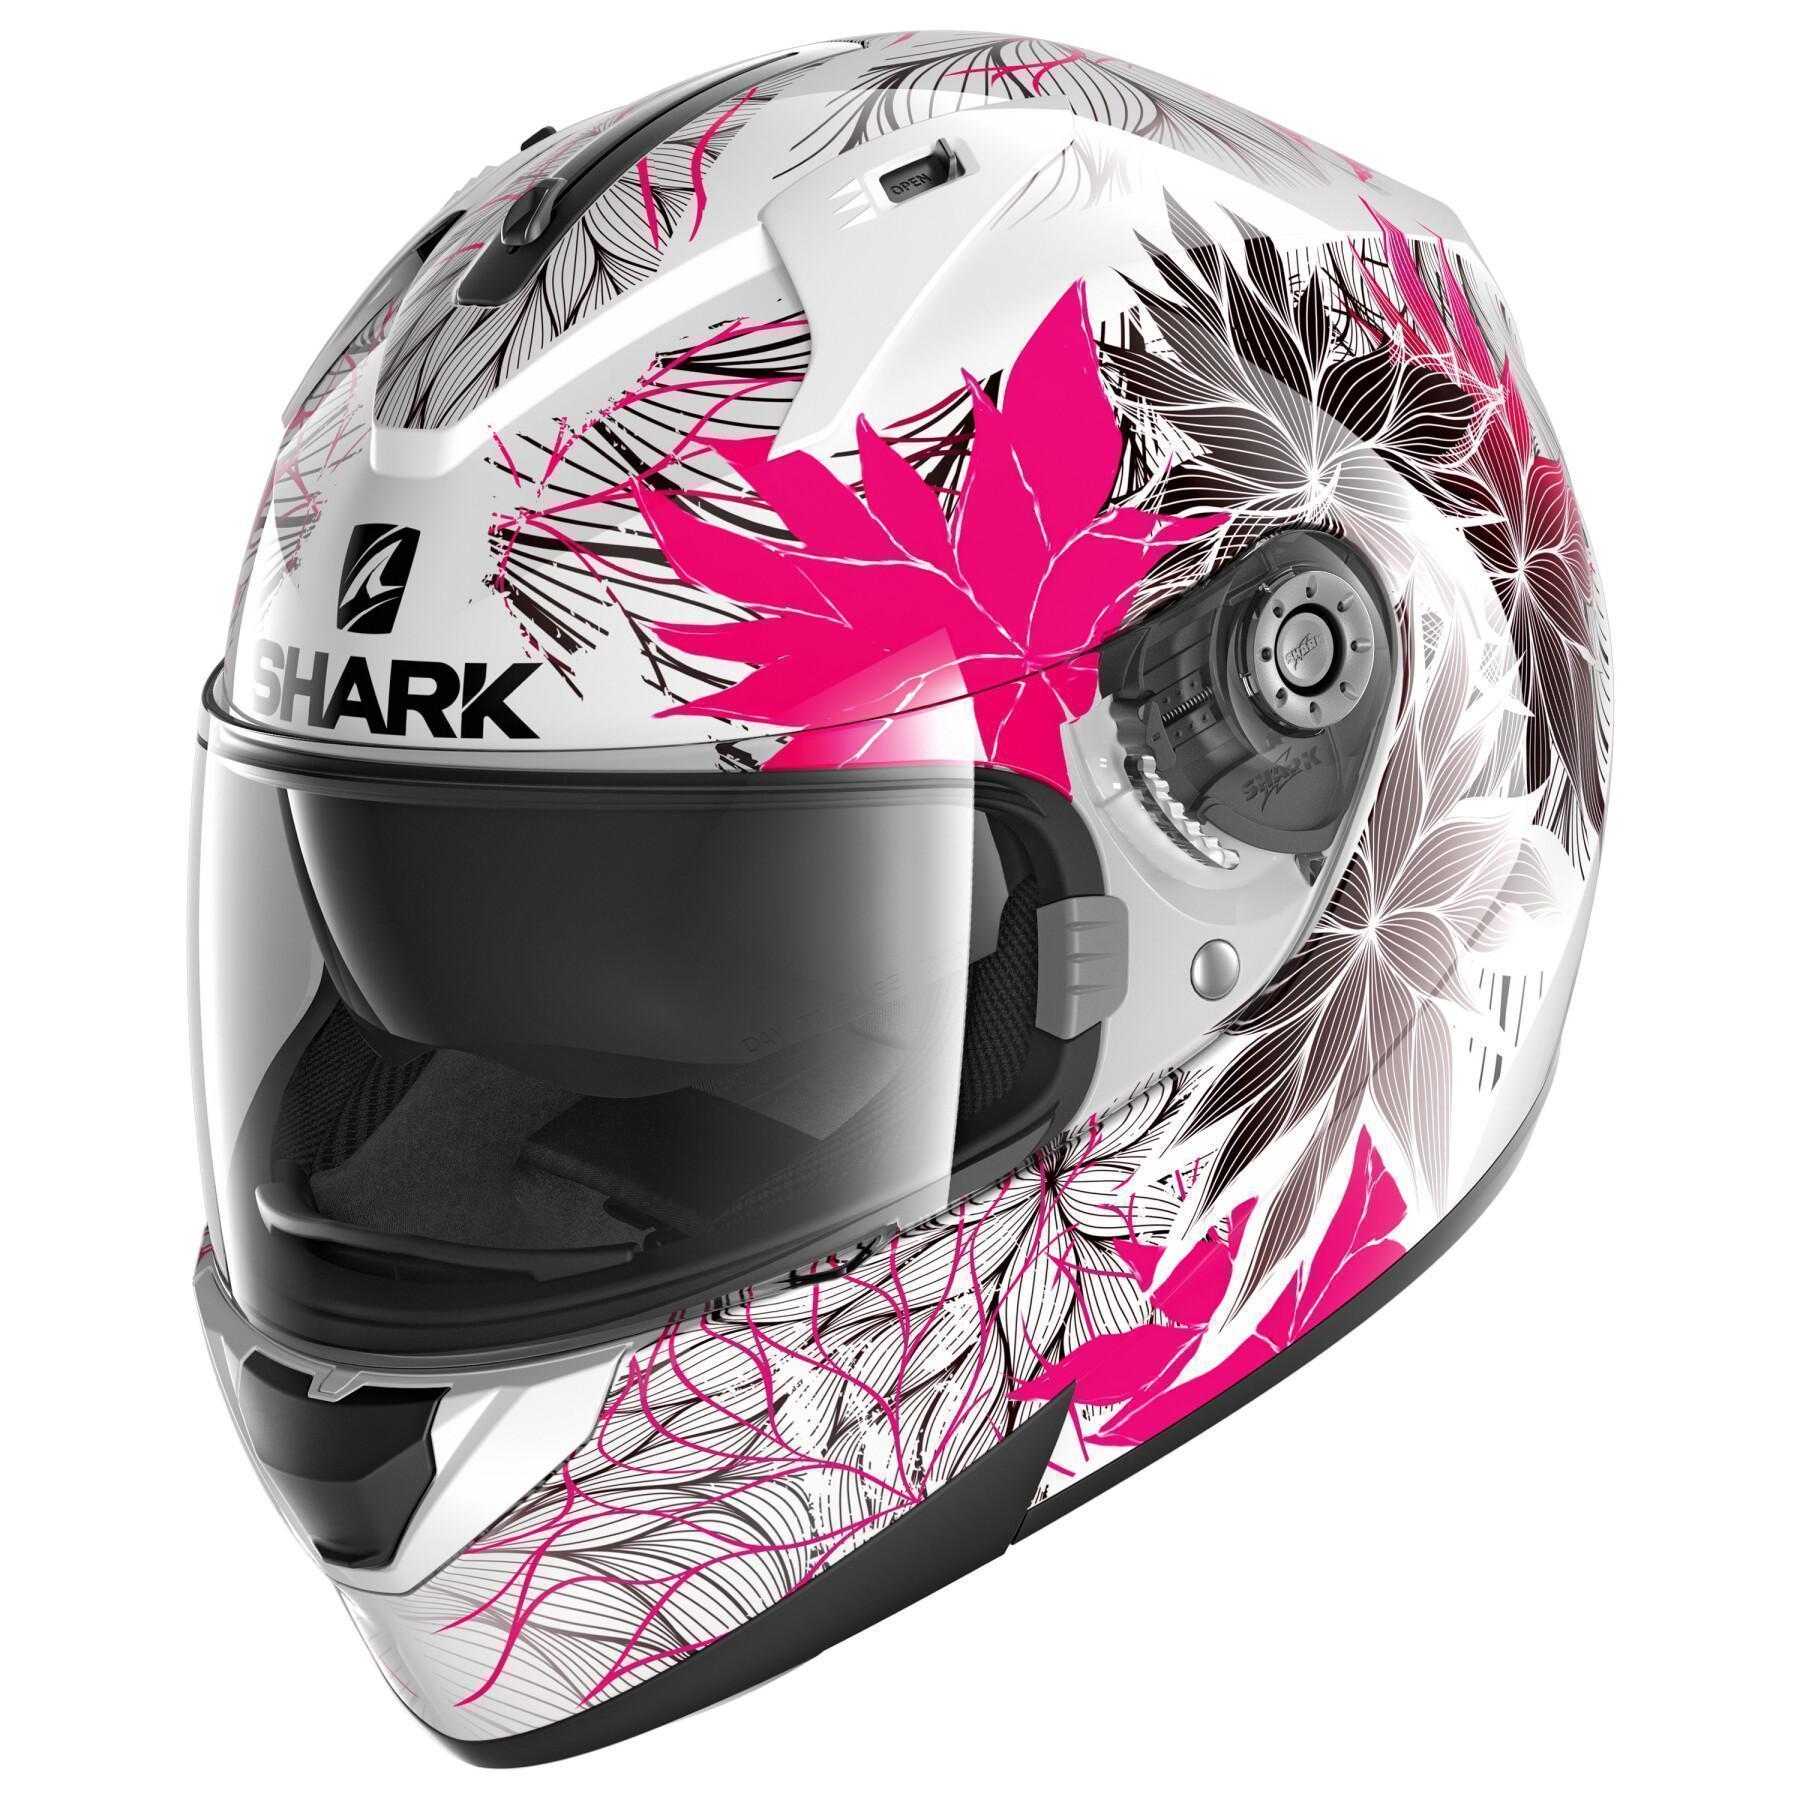 Full face motorcycle helmet Shark ridill 1.2 nelum